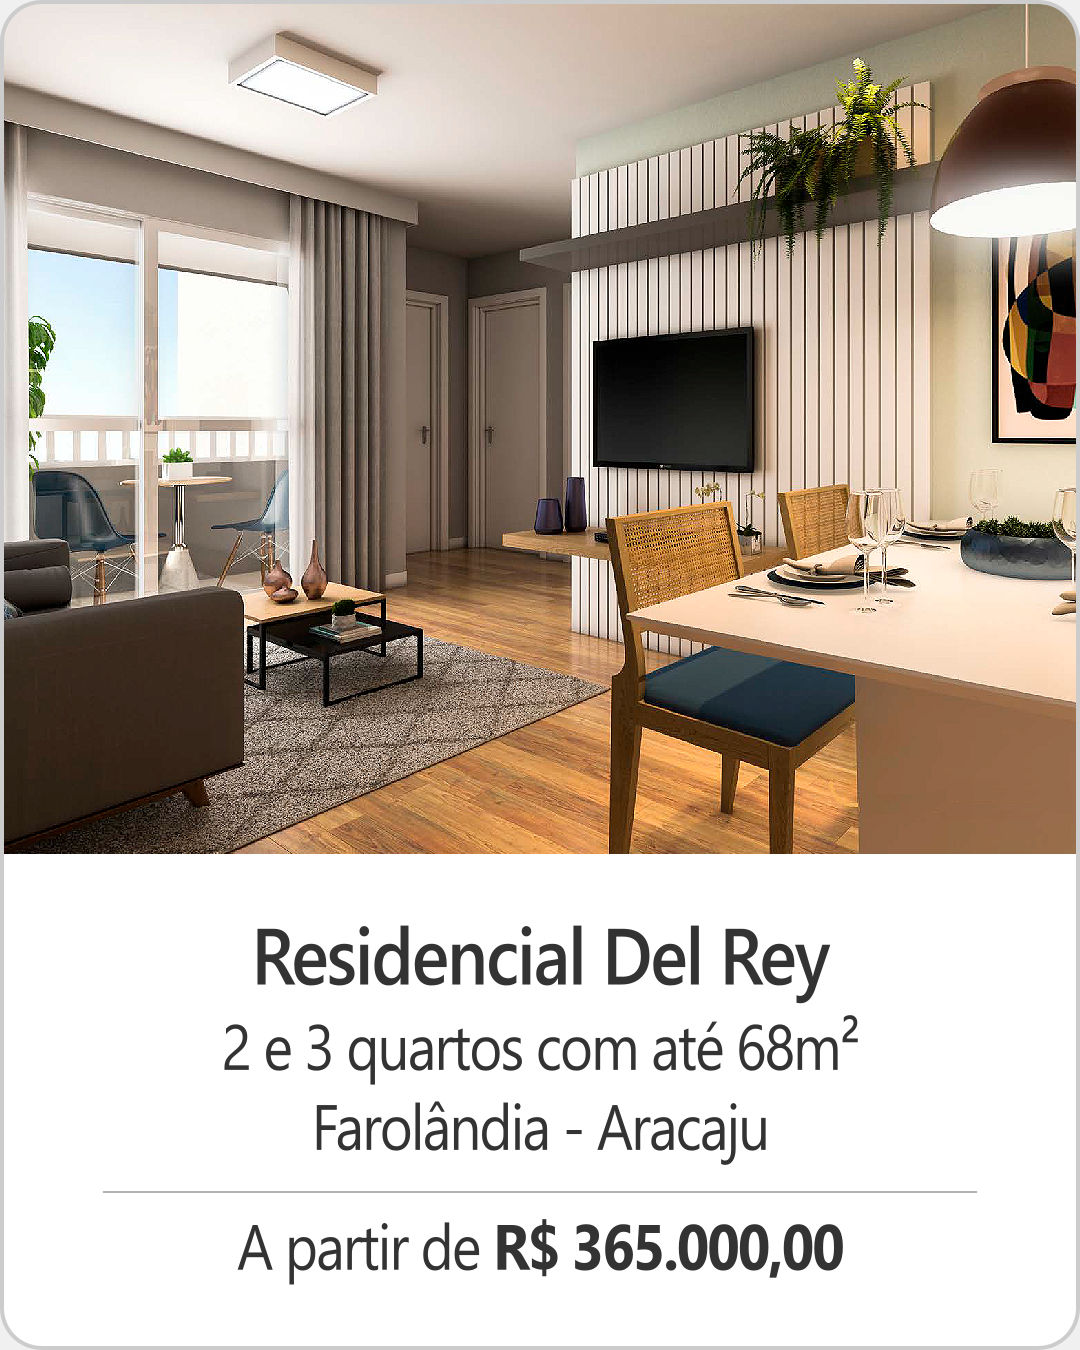 #residencialdelrey